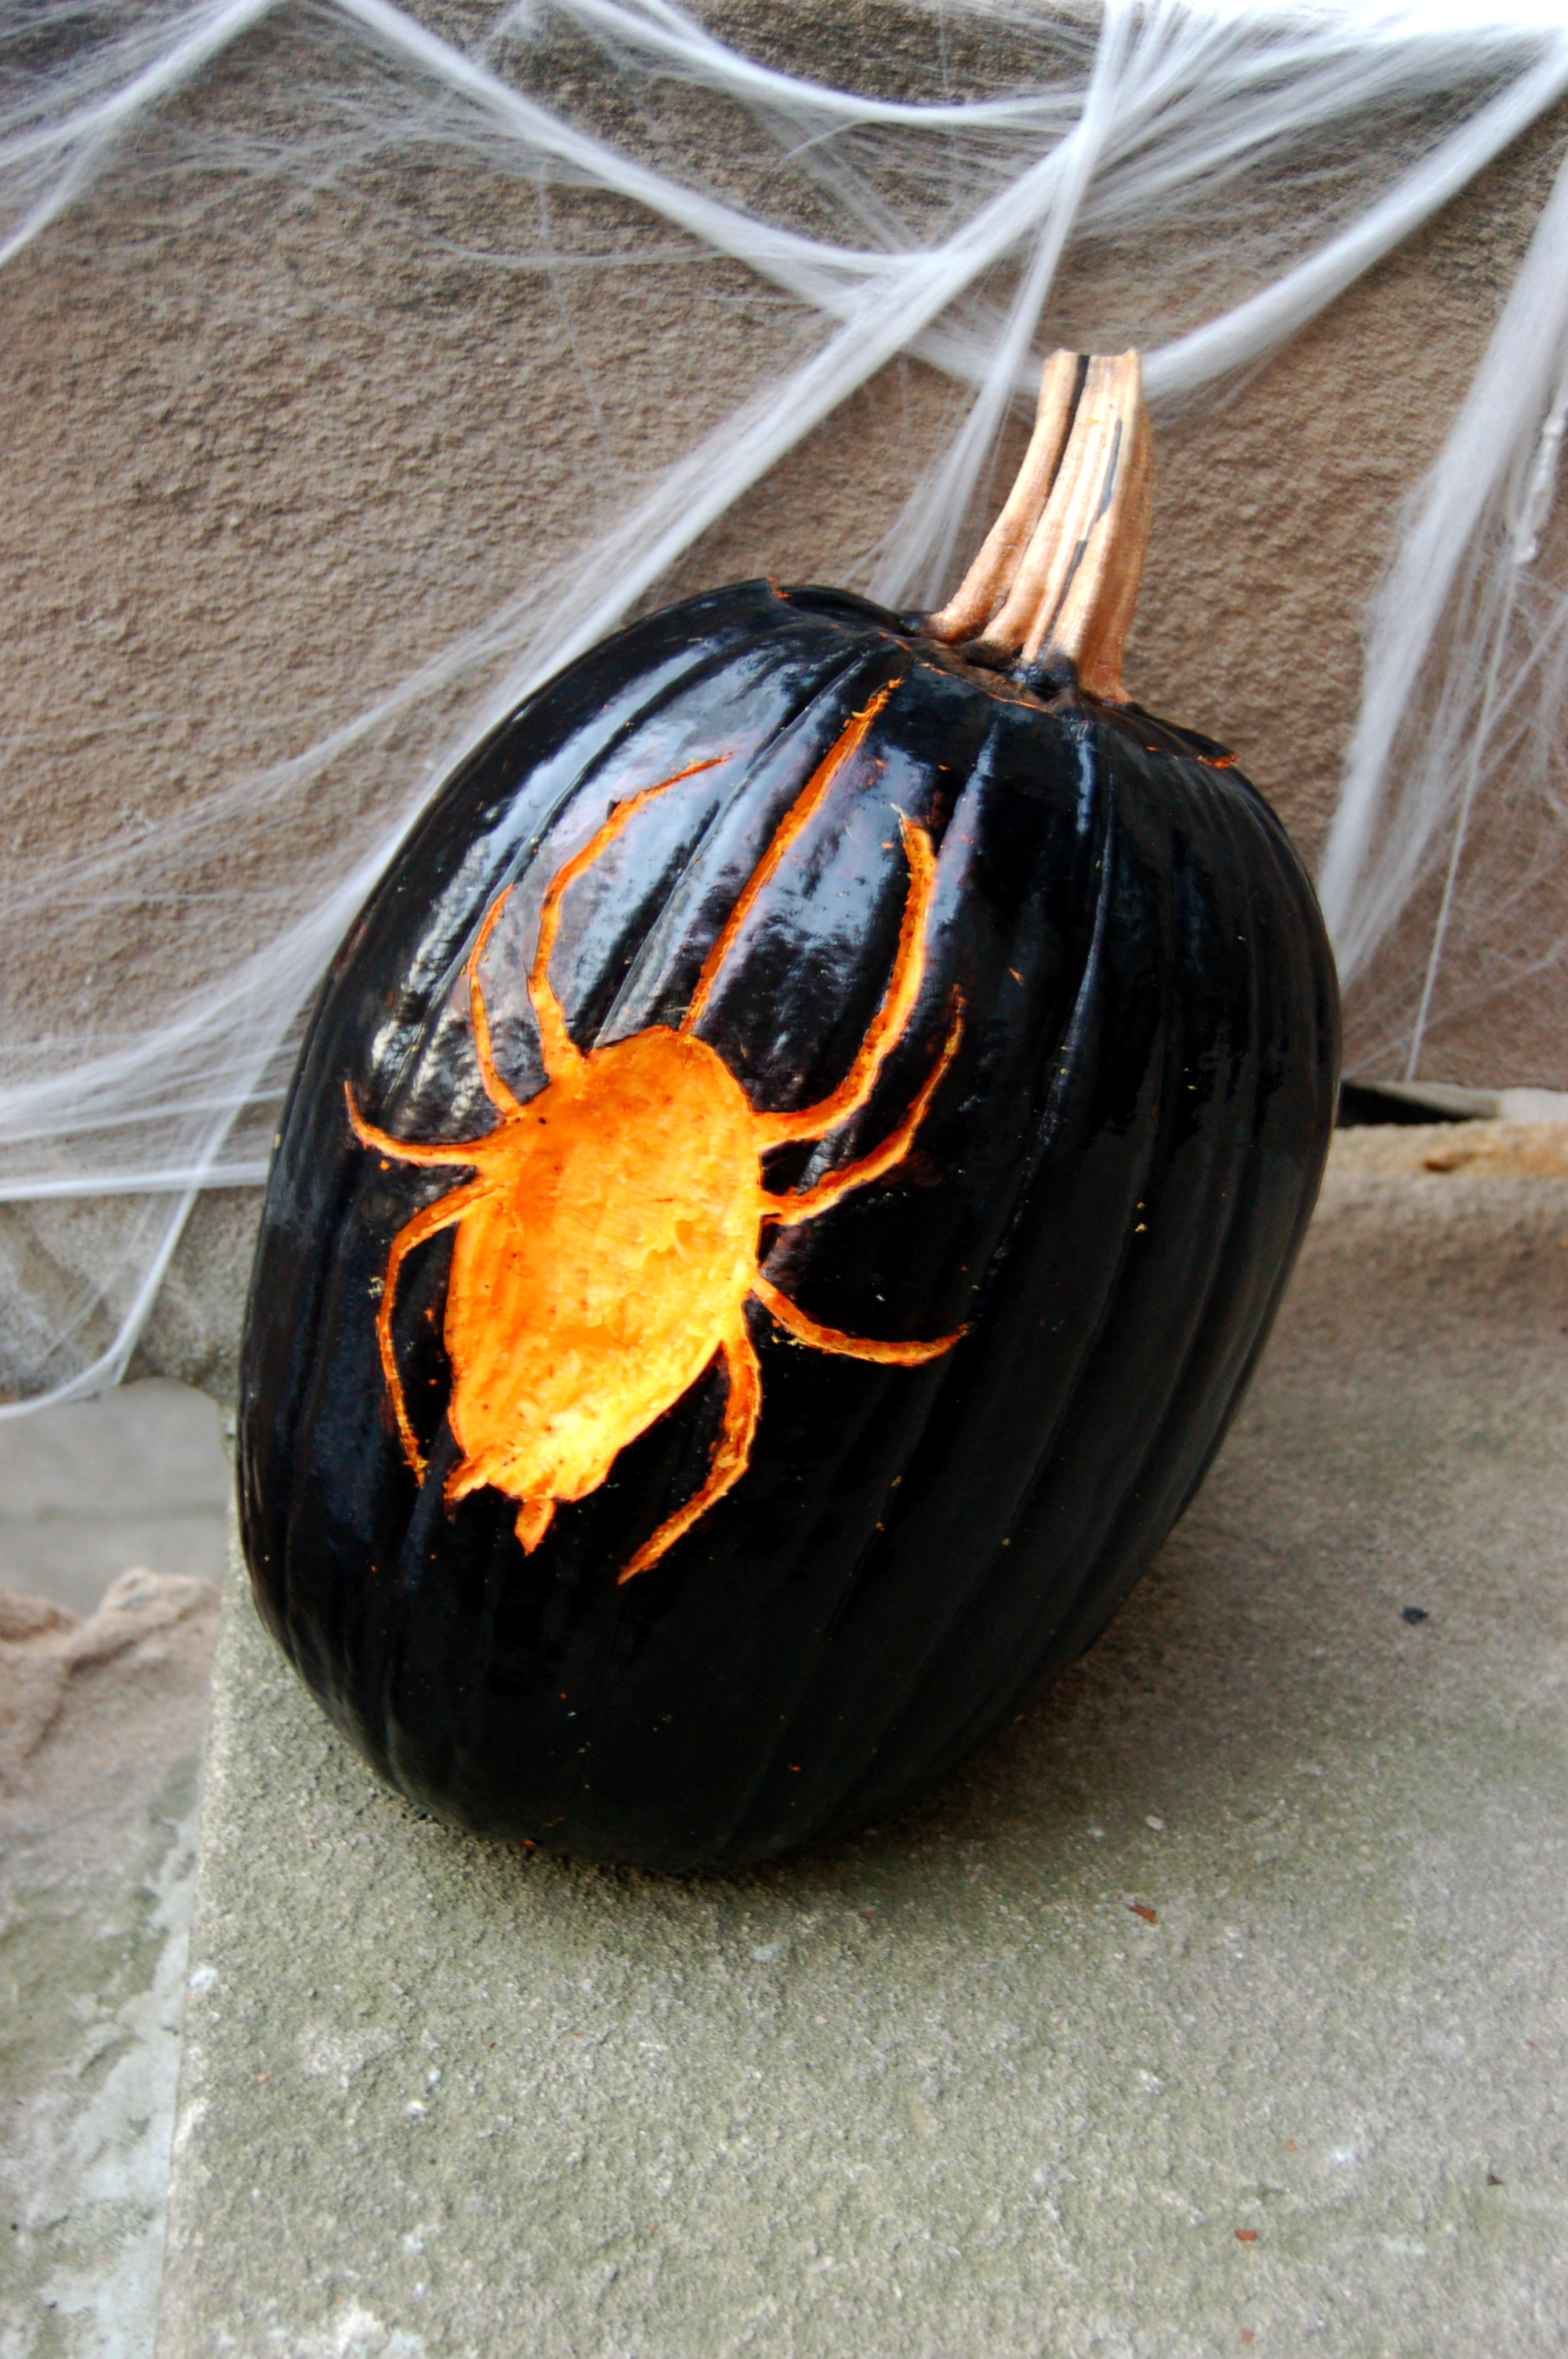 Spider Infestation Halloween www.brooklynlimestone.com